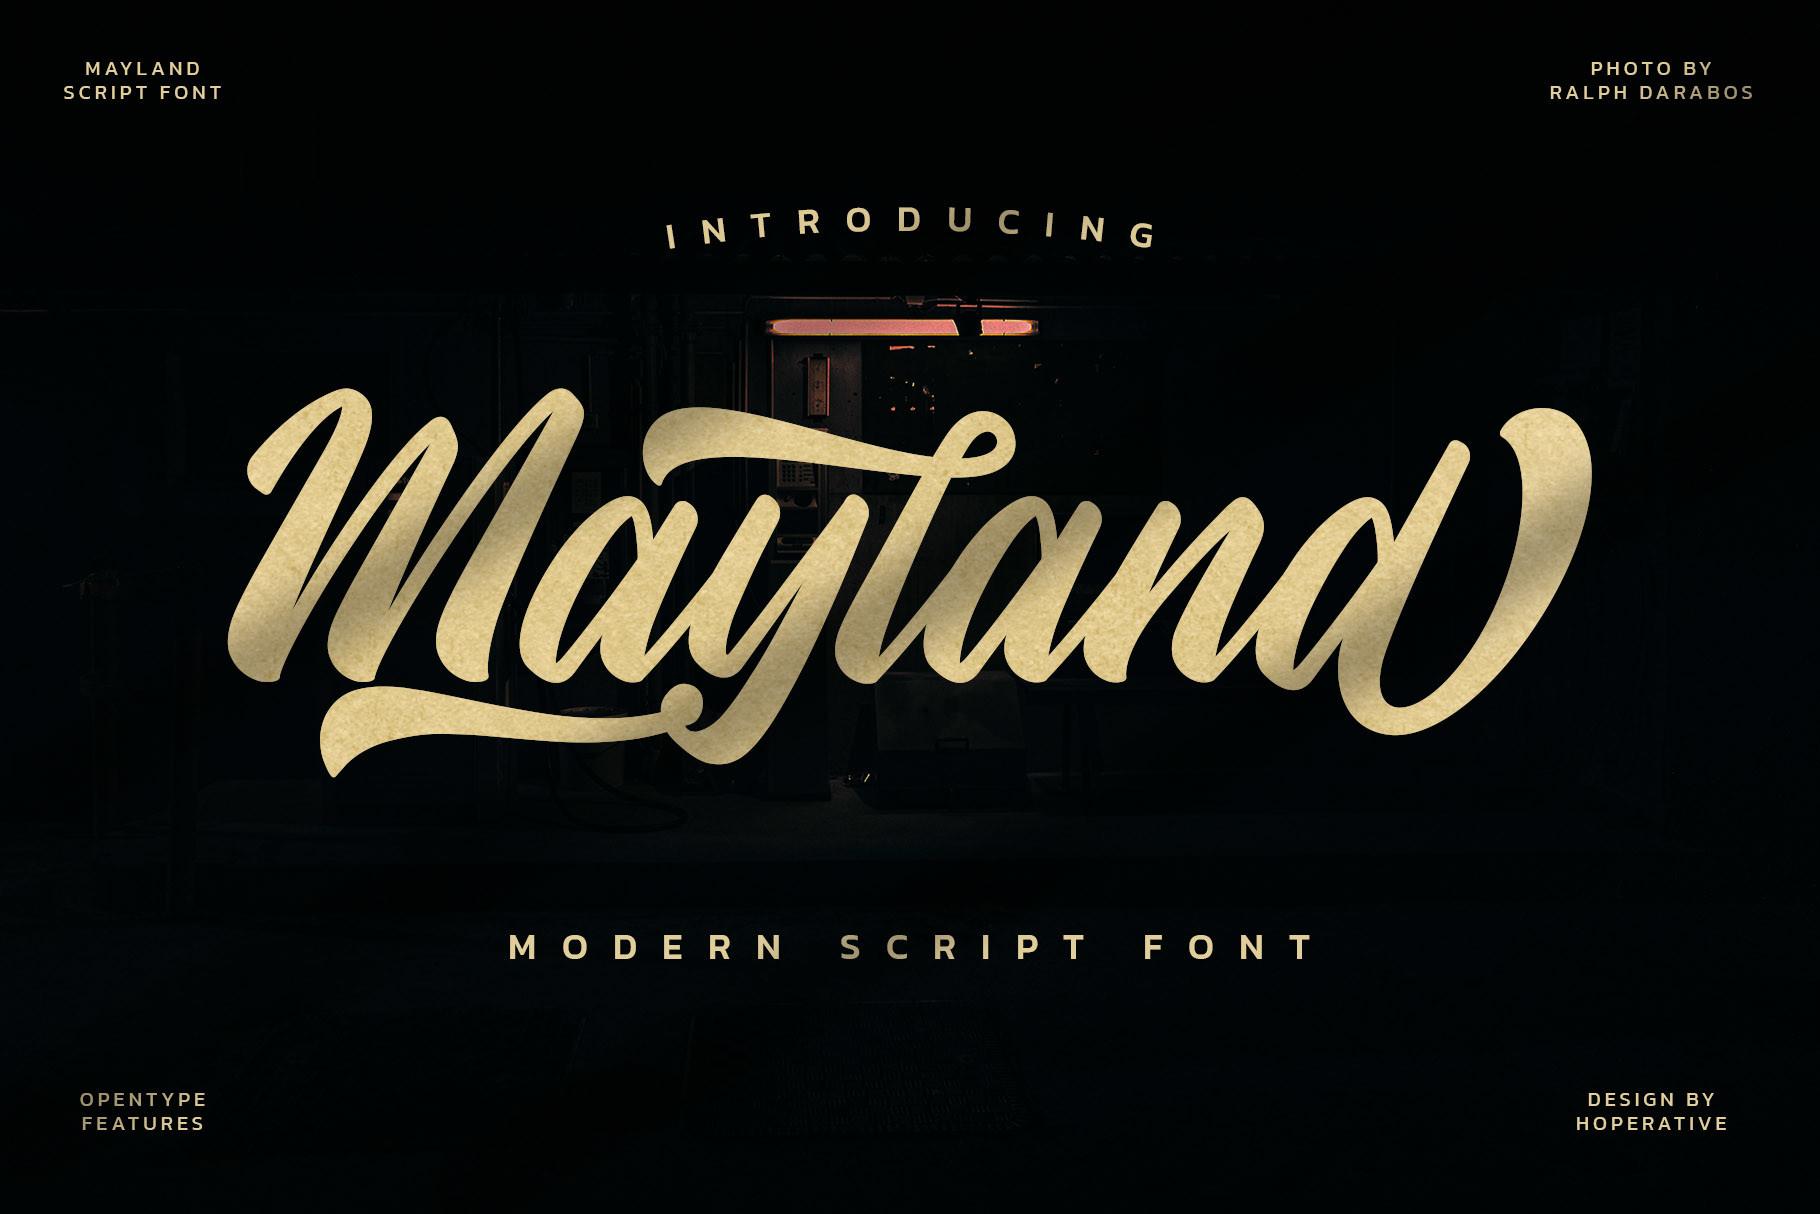 Mayland Font